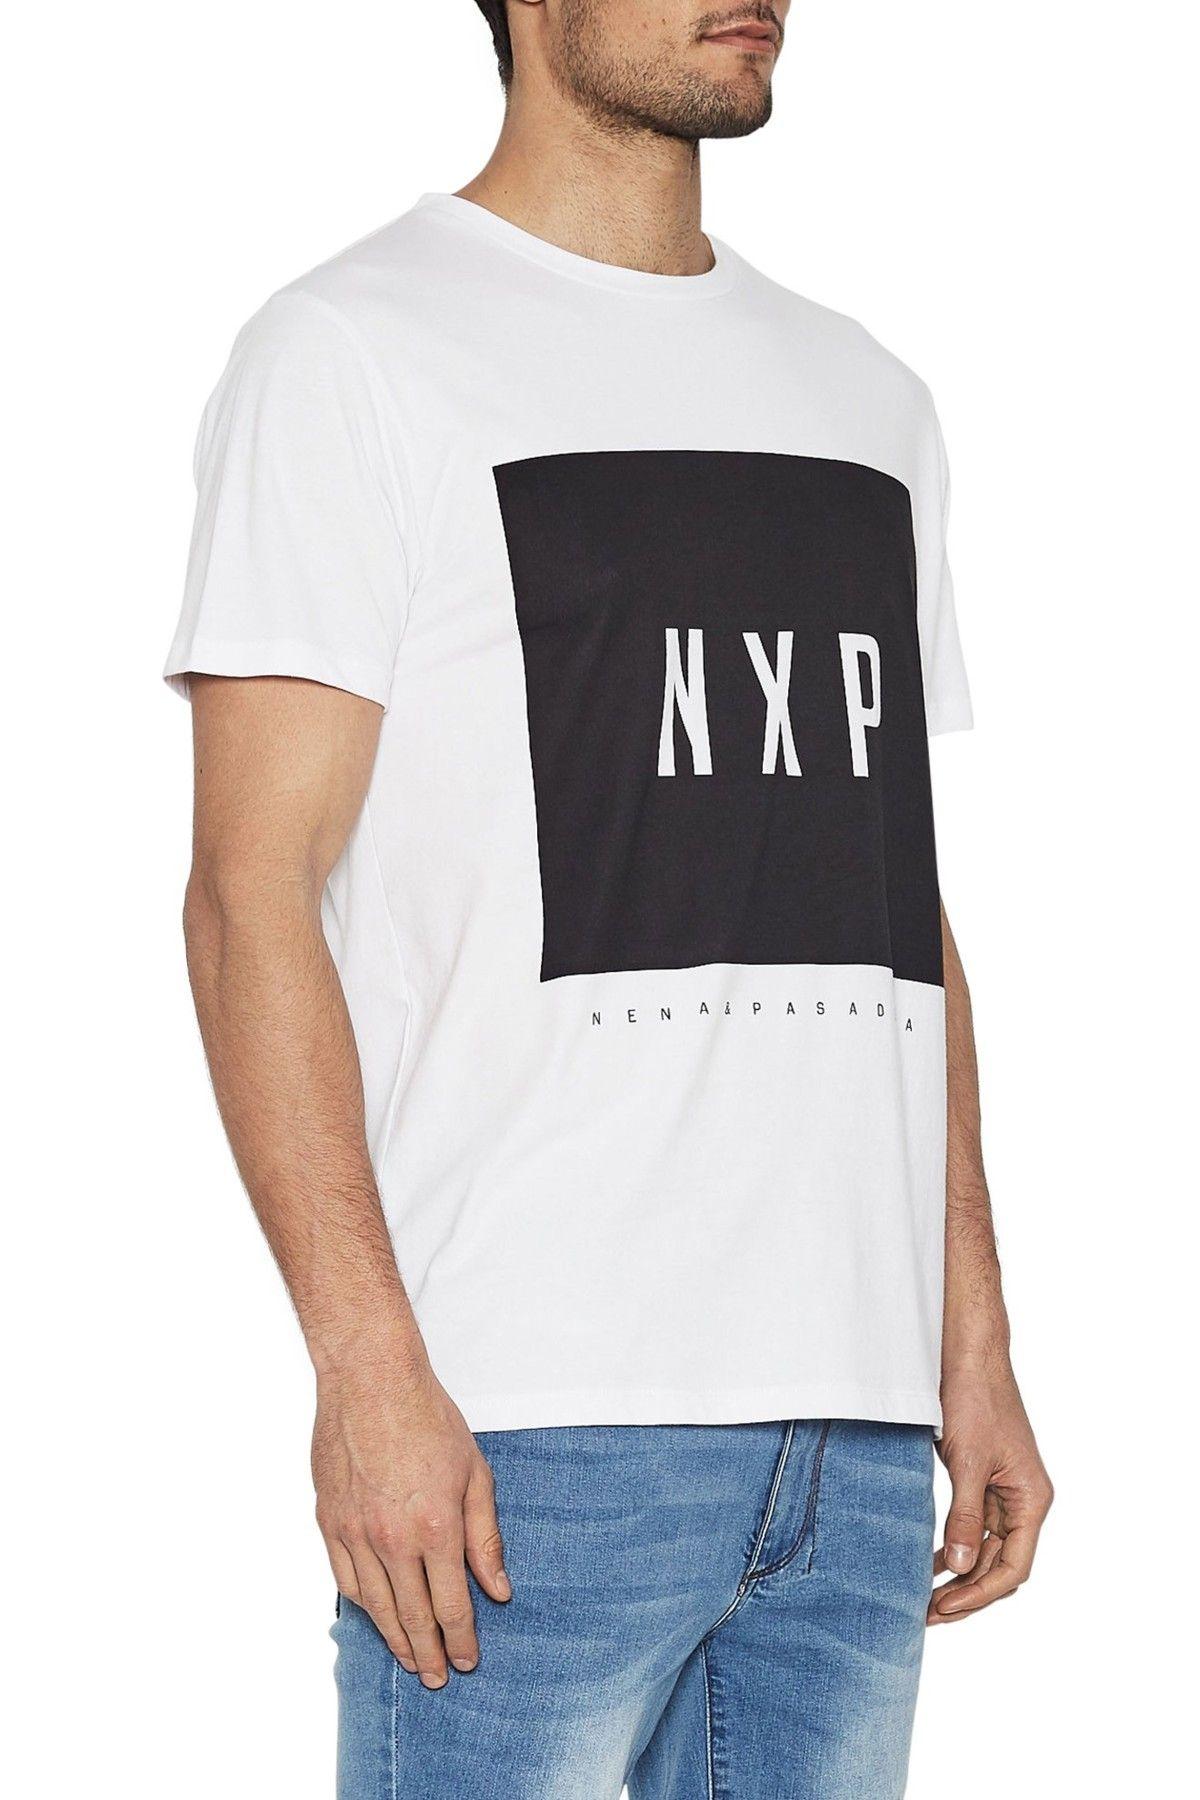 NXP Logo - NXP Logo T-Shirt WHITE FMNN1913